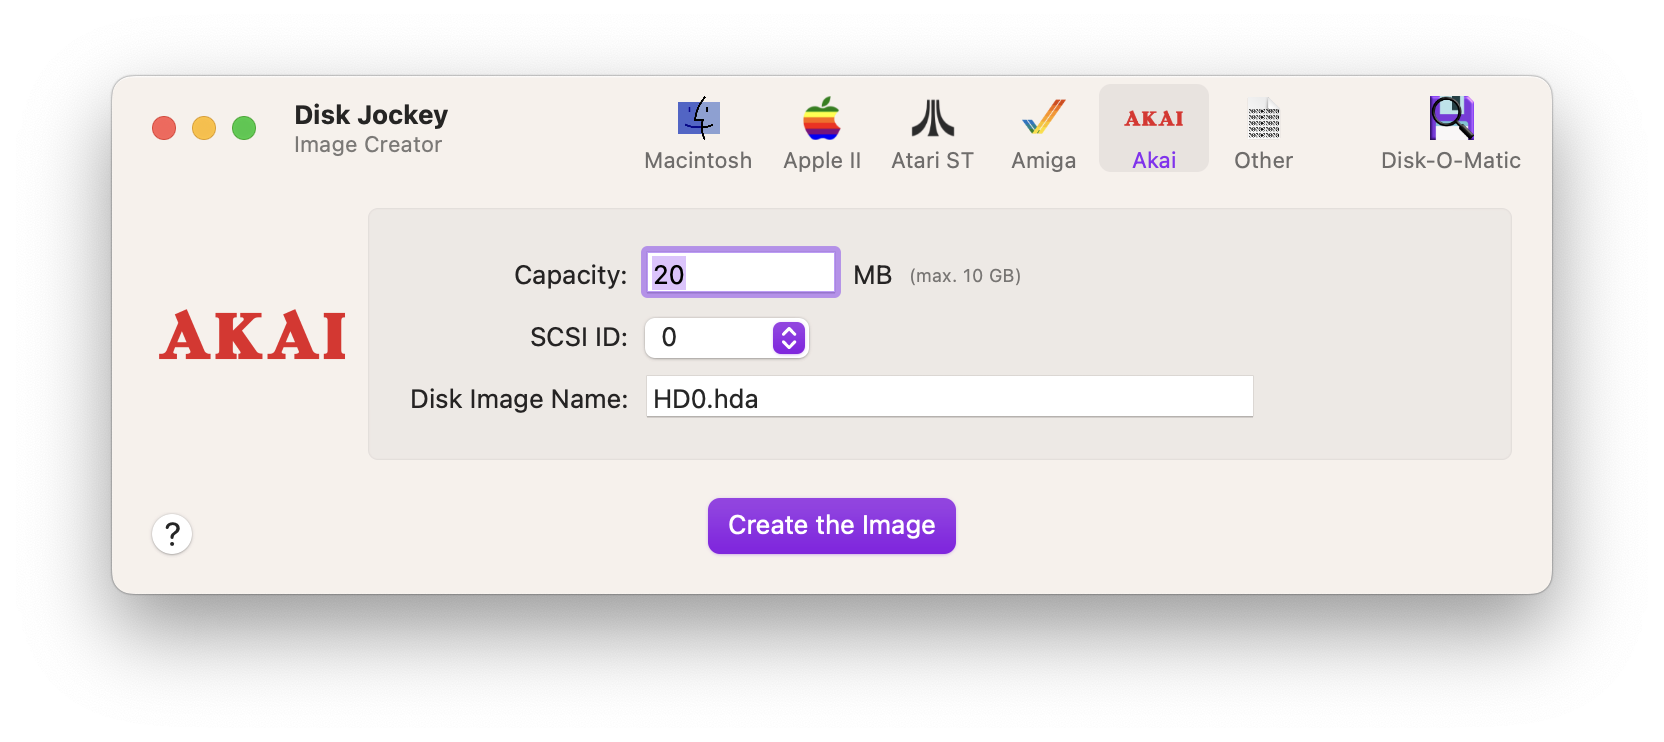 A screenshot of Disk Jockey with the Akai image creator displayed